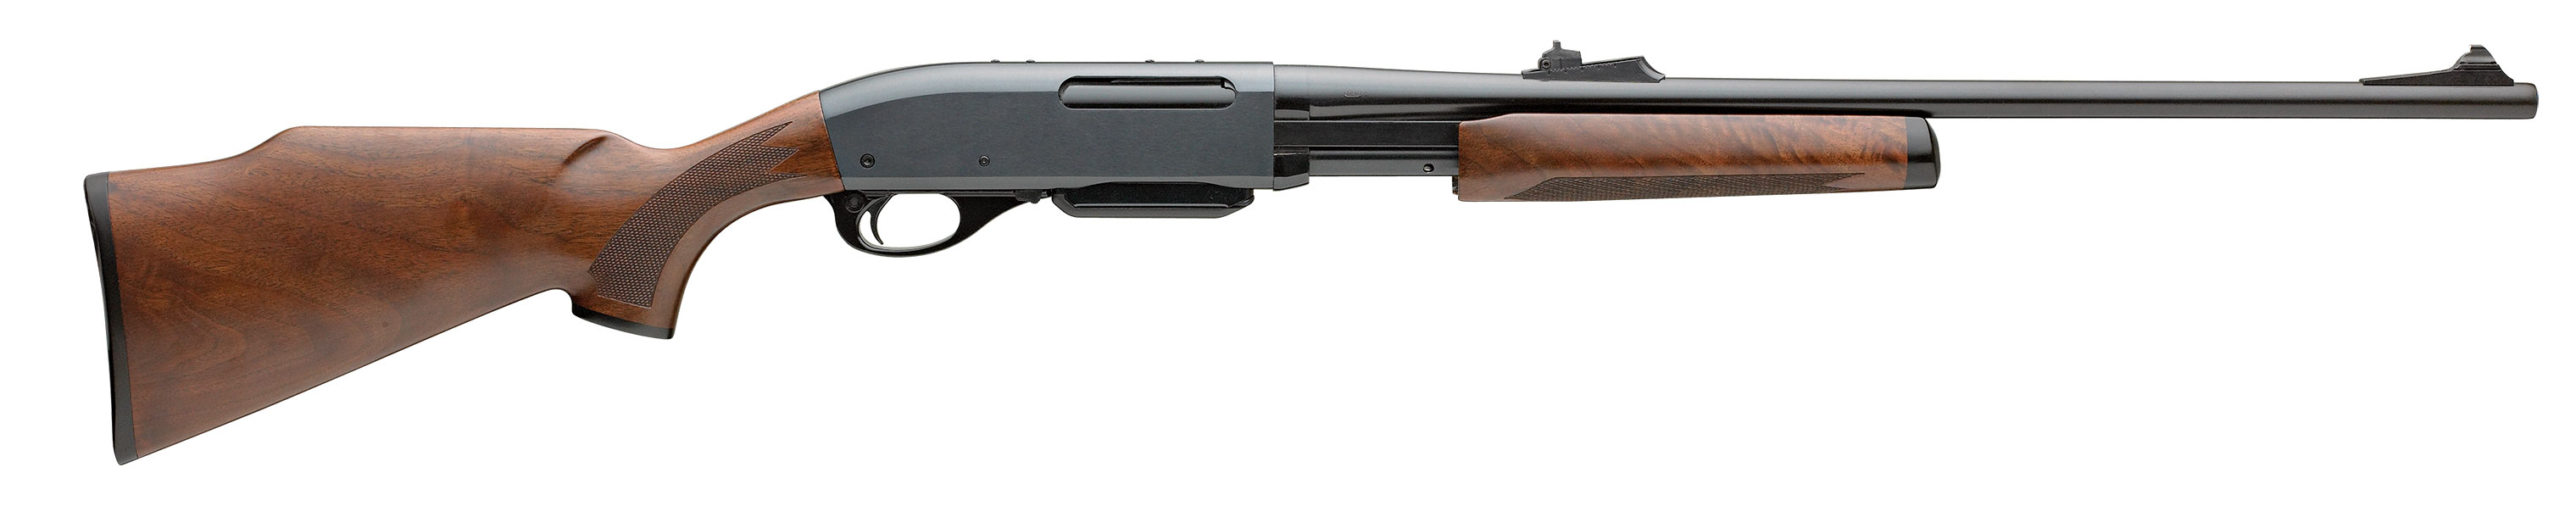 Remington Rifle #11